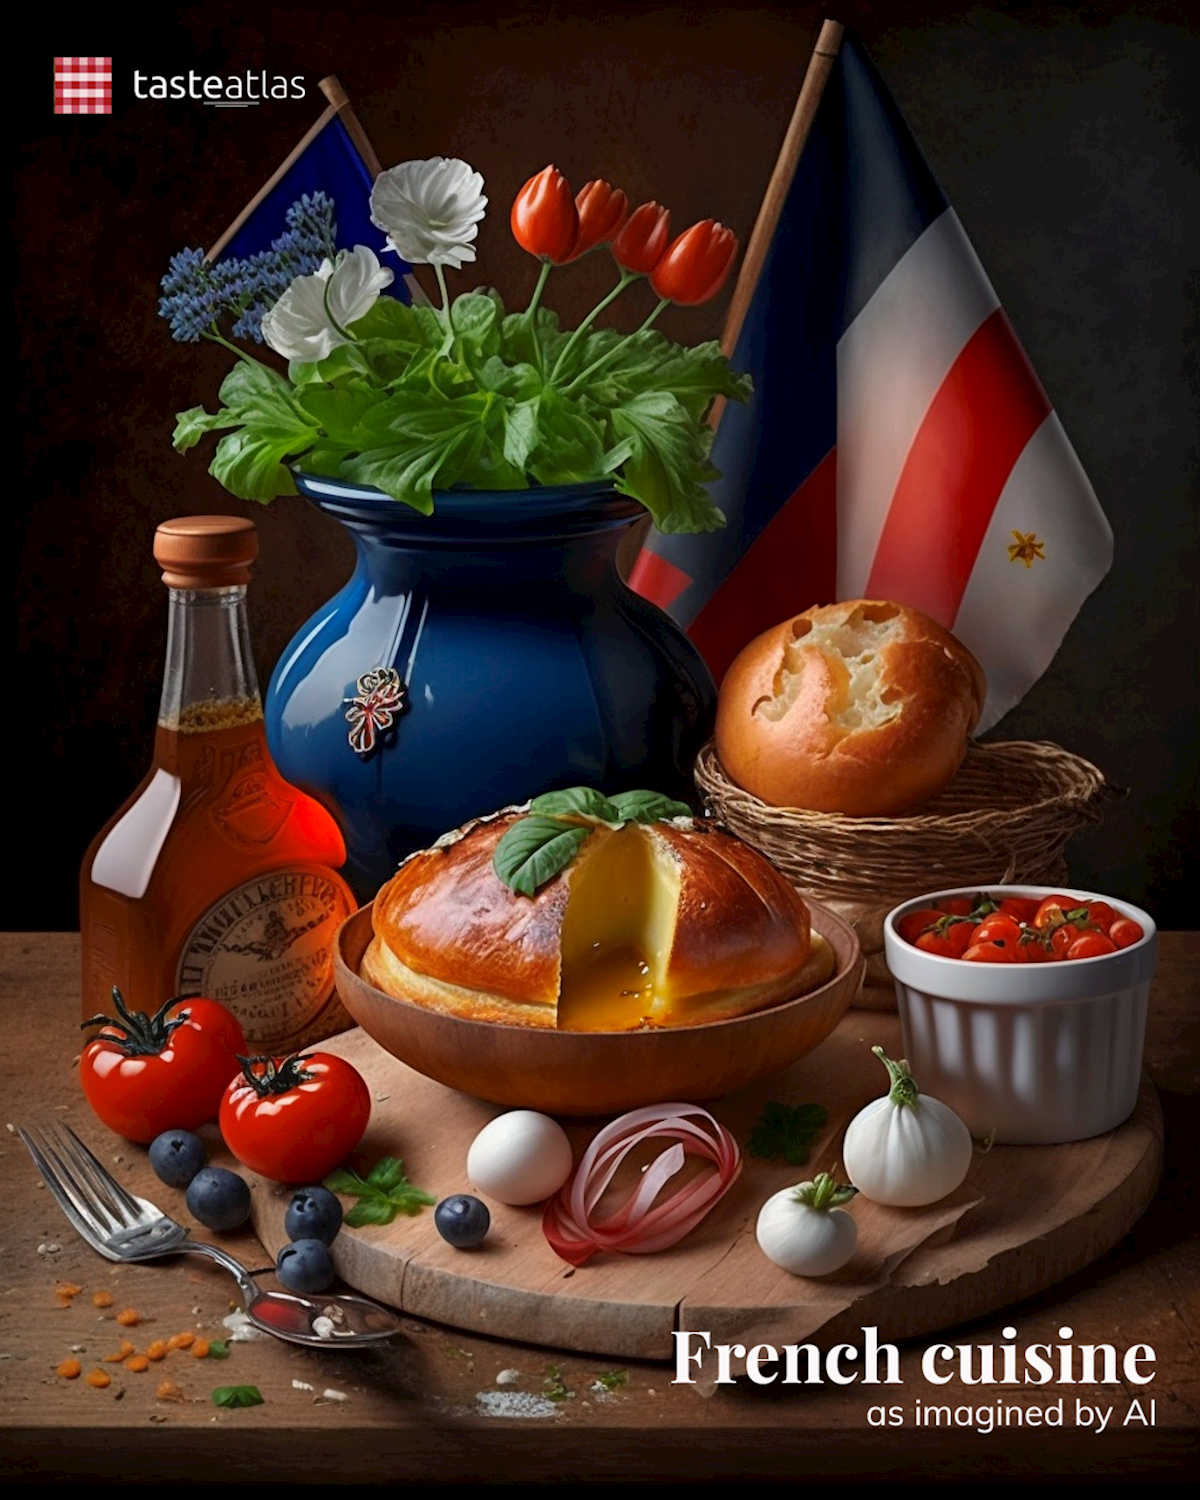 Prompt: Imagine French cuisine